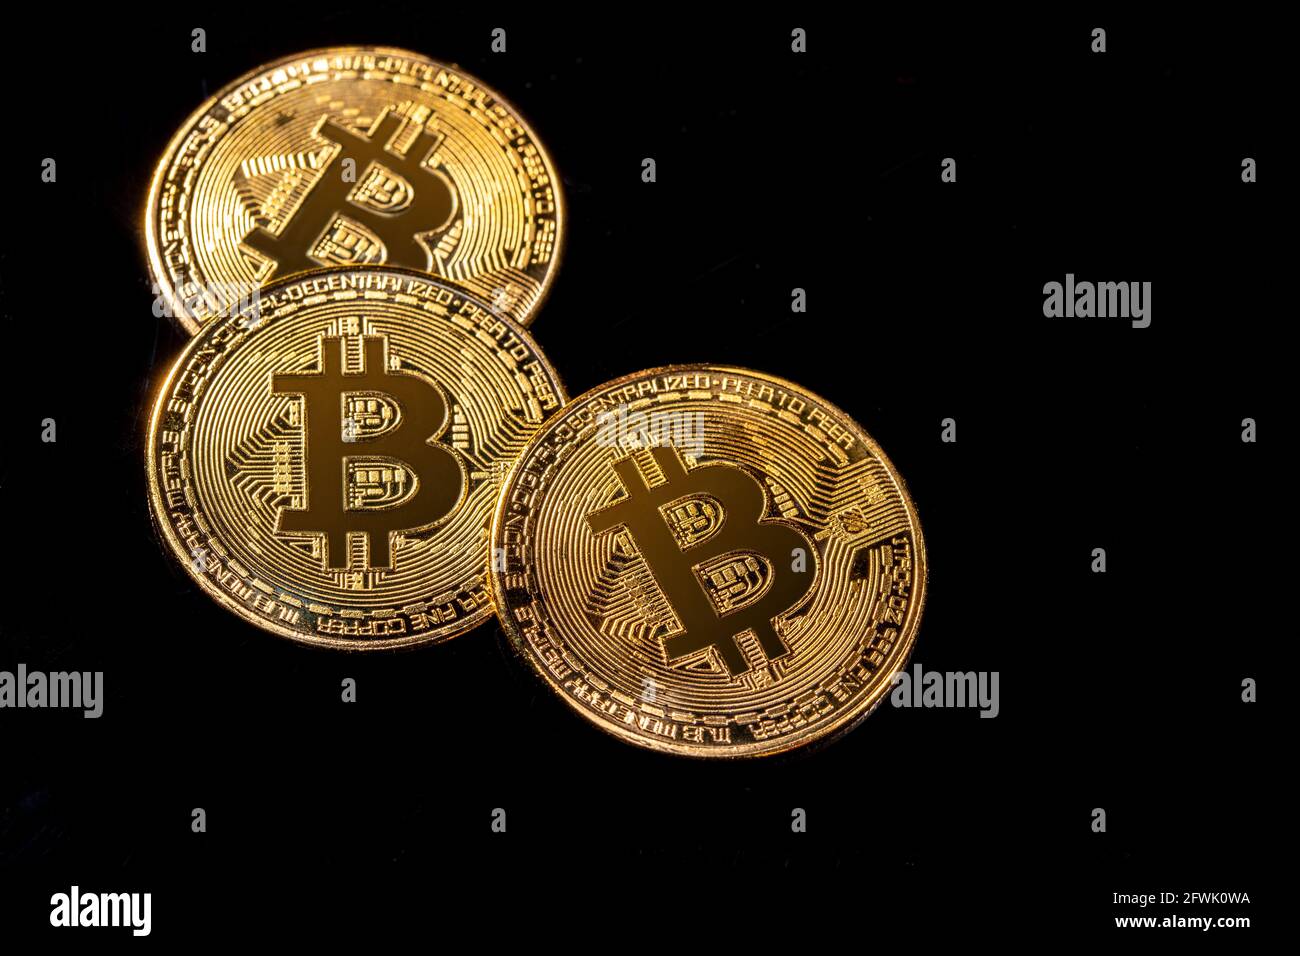 Bitcoin BTC Cryptocurrency Coins. Stock Market Concept. Stock Photo